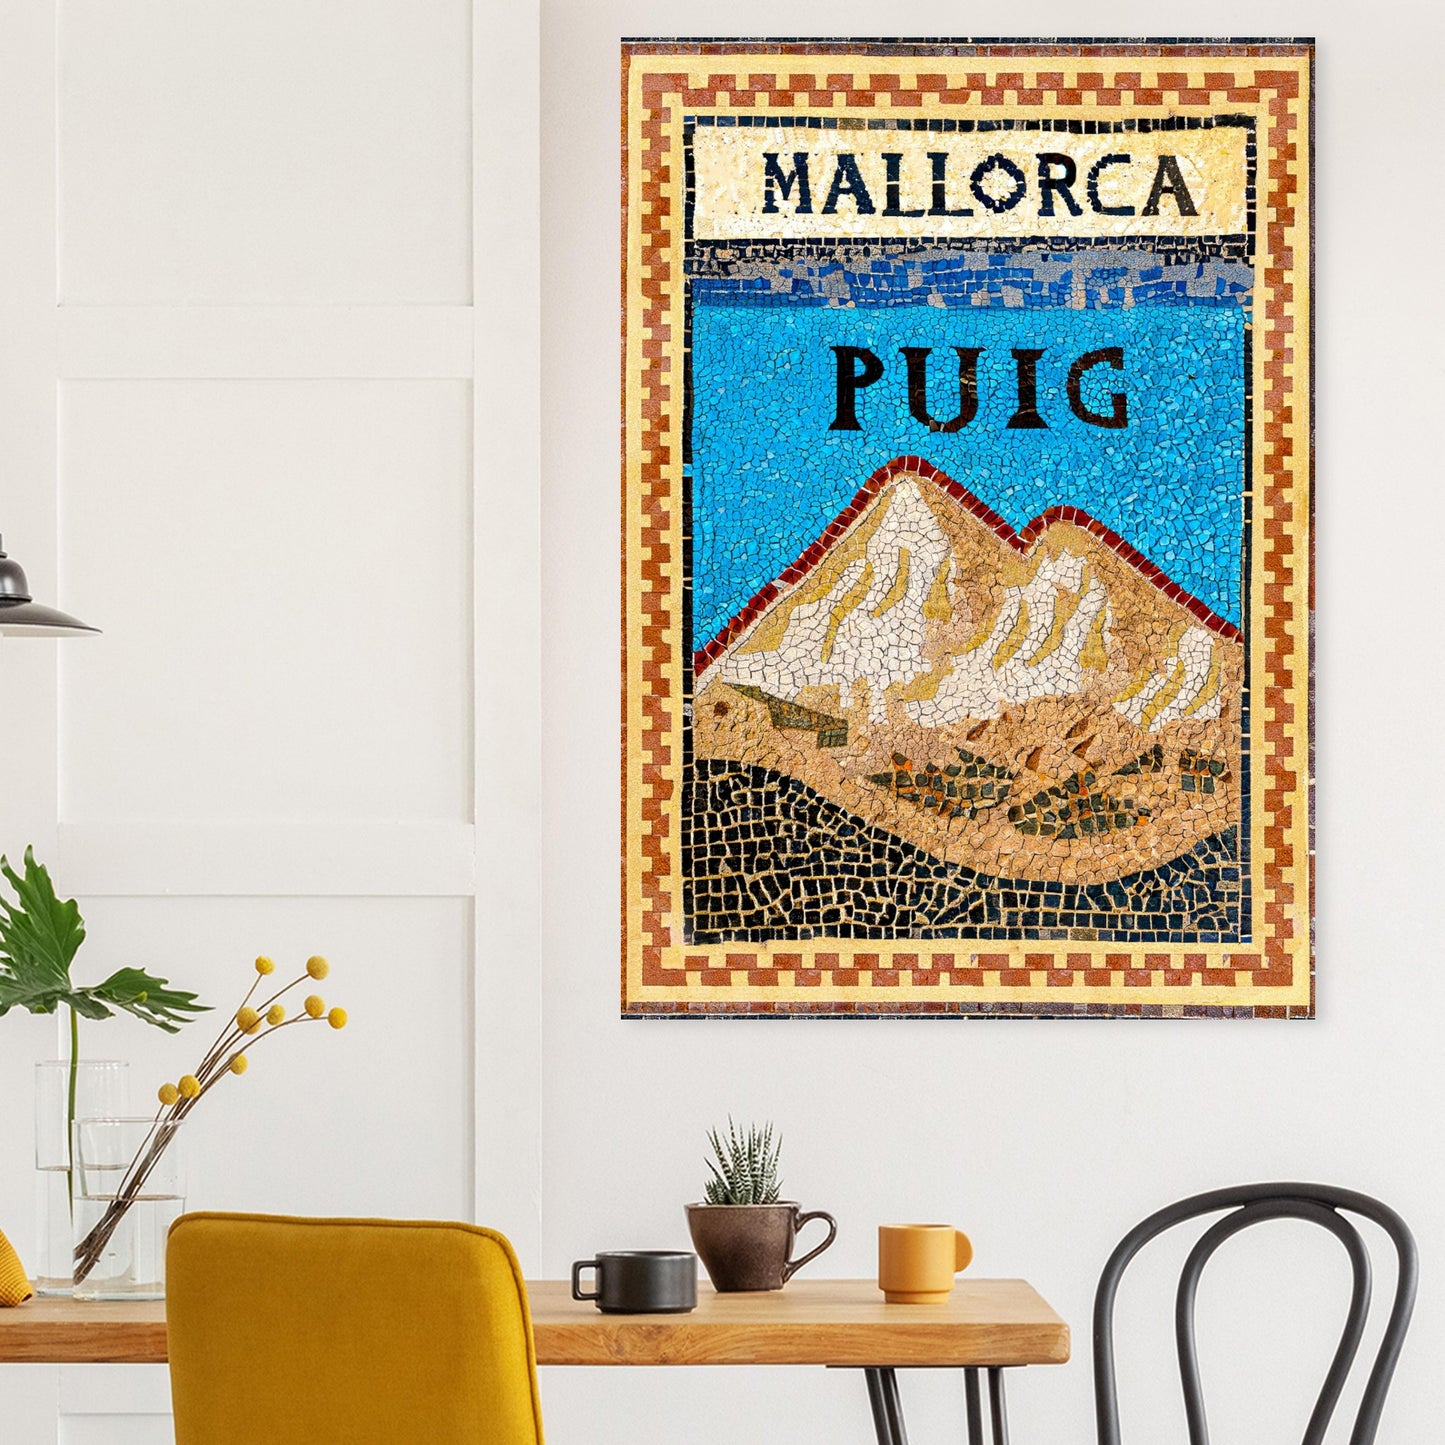 Puig Major, Mallorca by Posterify Design Poster on Premium Matte Paper - Posterify